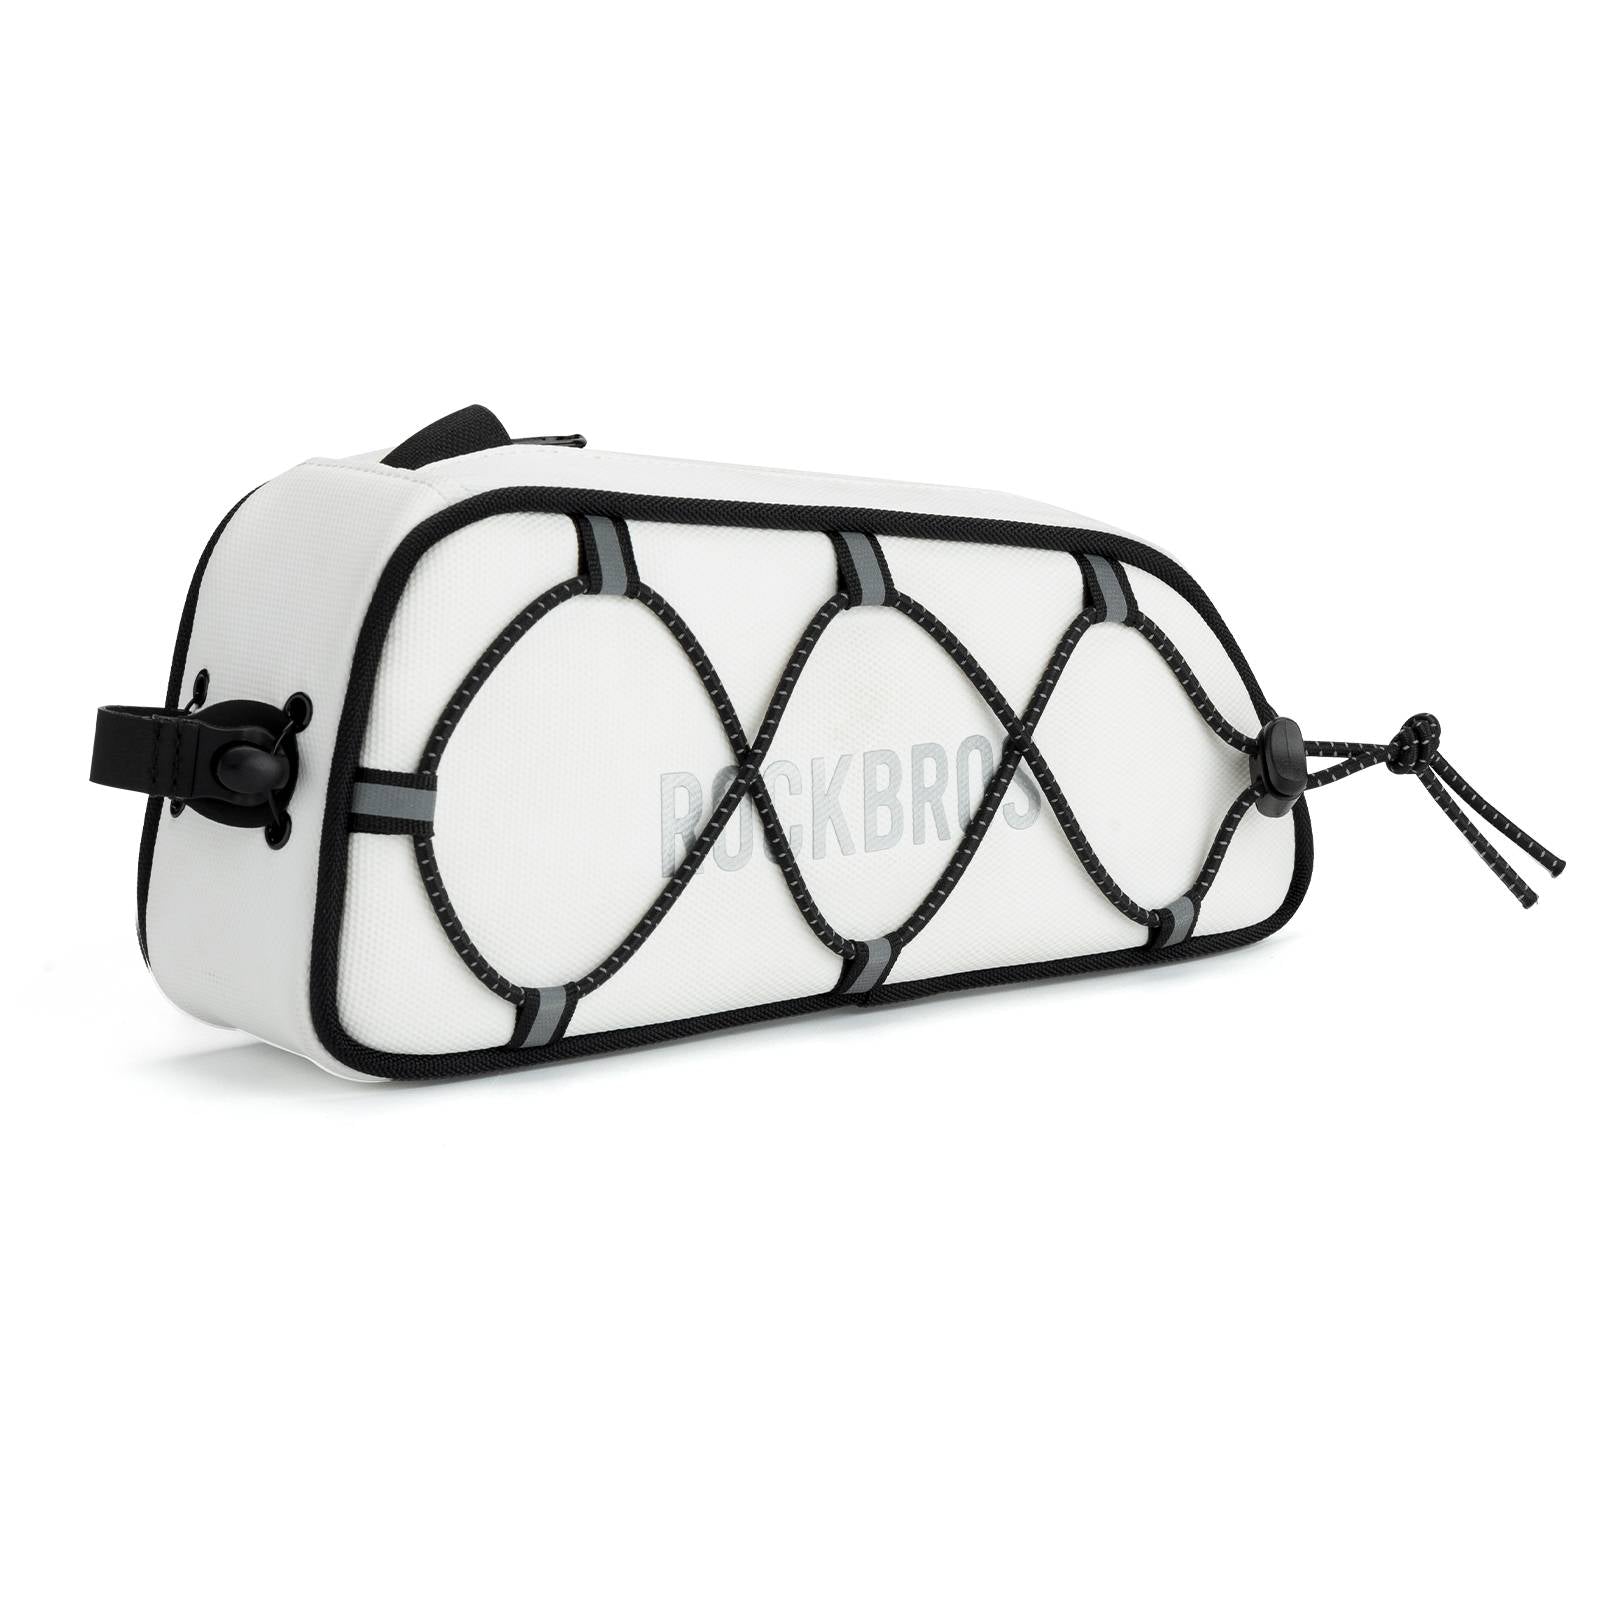 ROCKBROS Bicycle Top Tube Bag Frame Bag 0.7L Reflective Bicycle Bag #Color_White